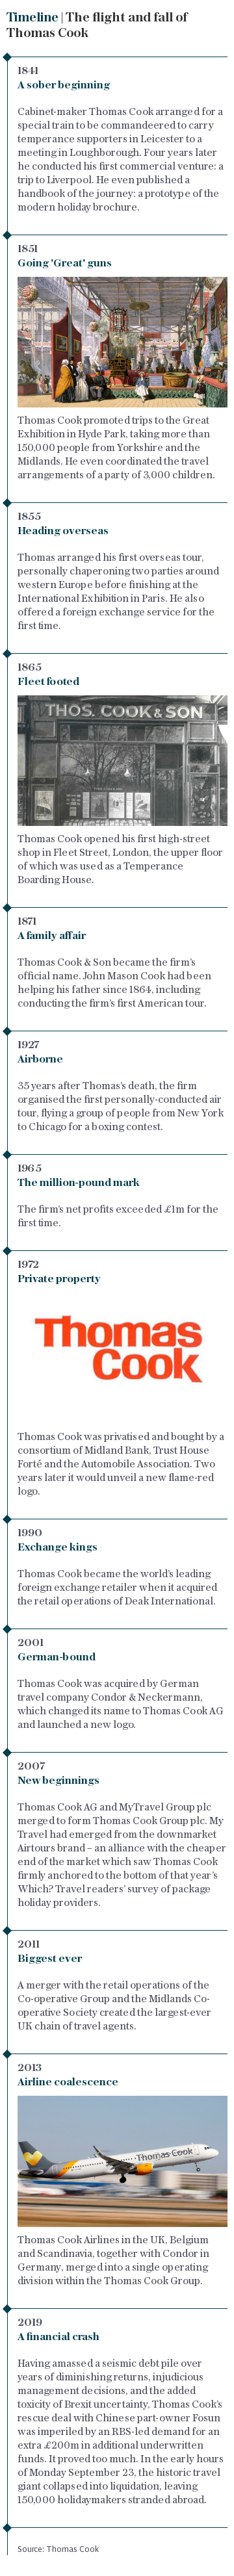 Thomas Cook timeline